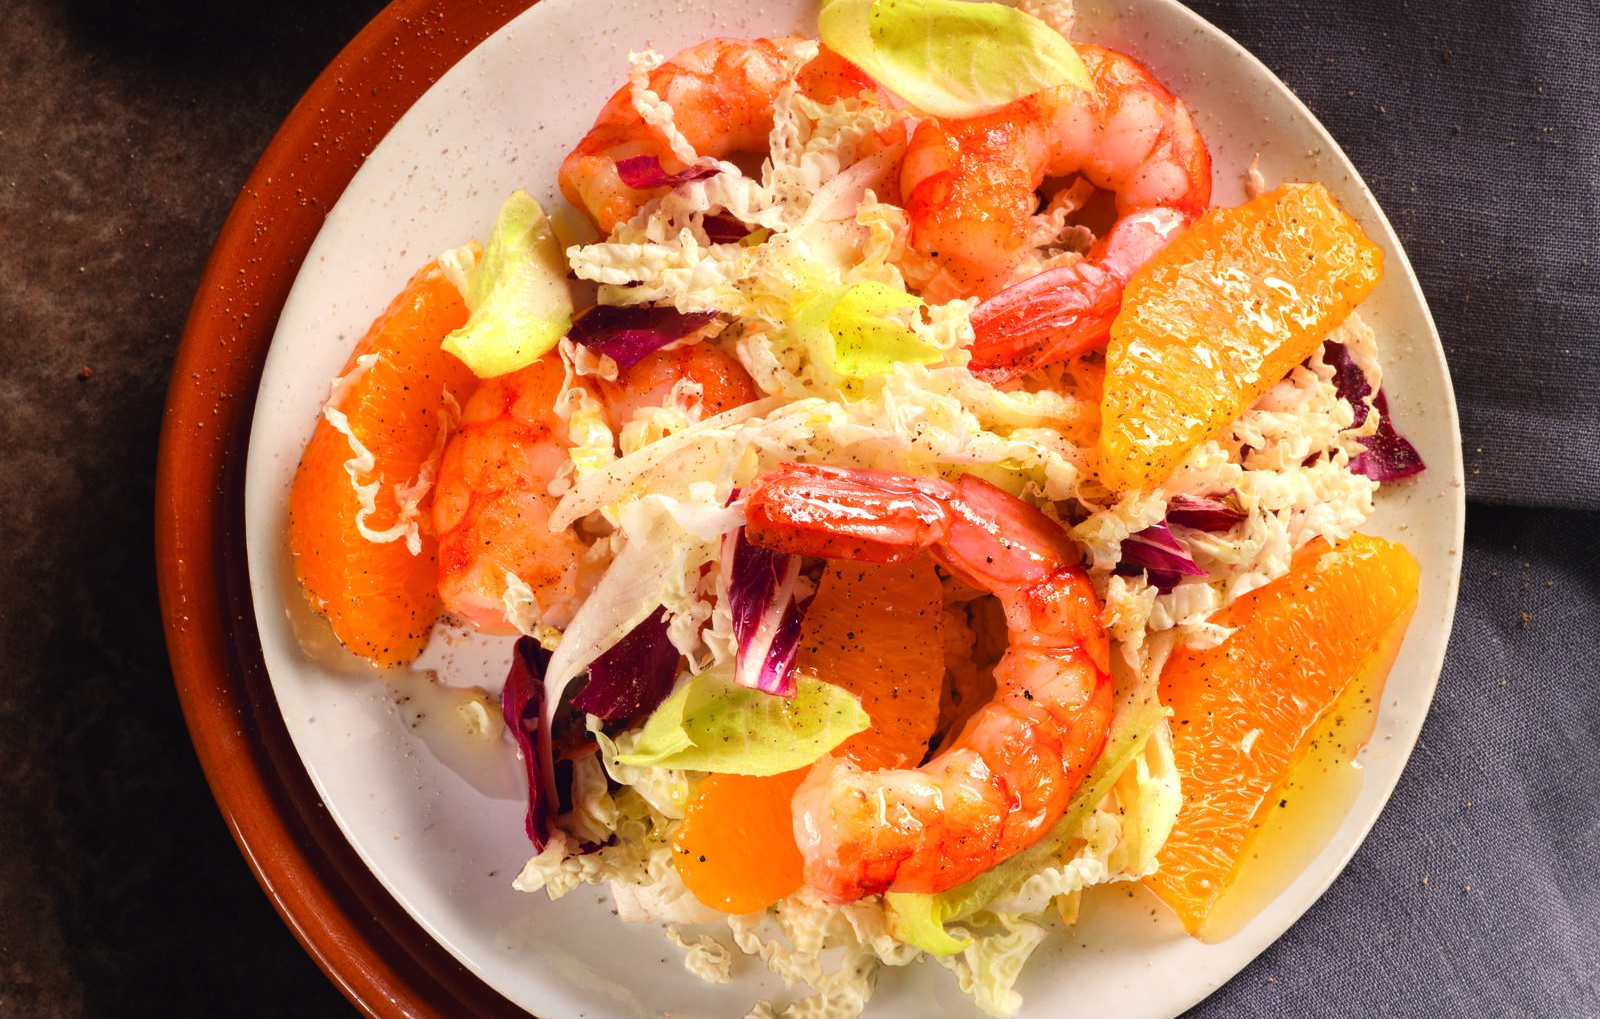 Sauteed shrimp, endives and orange